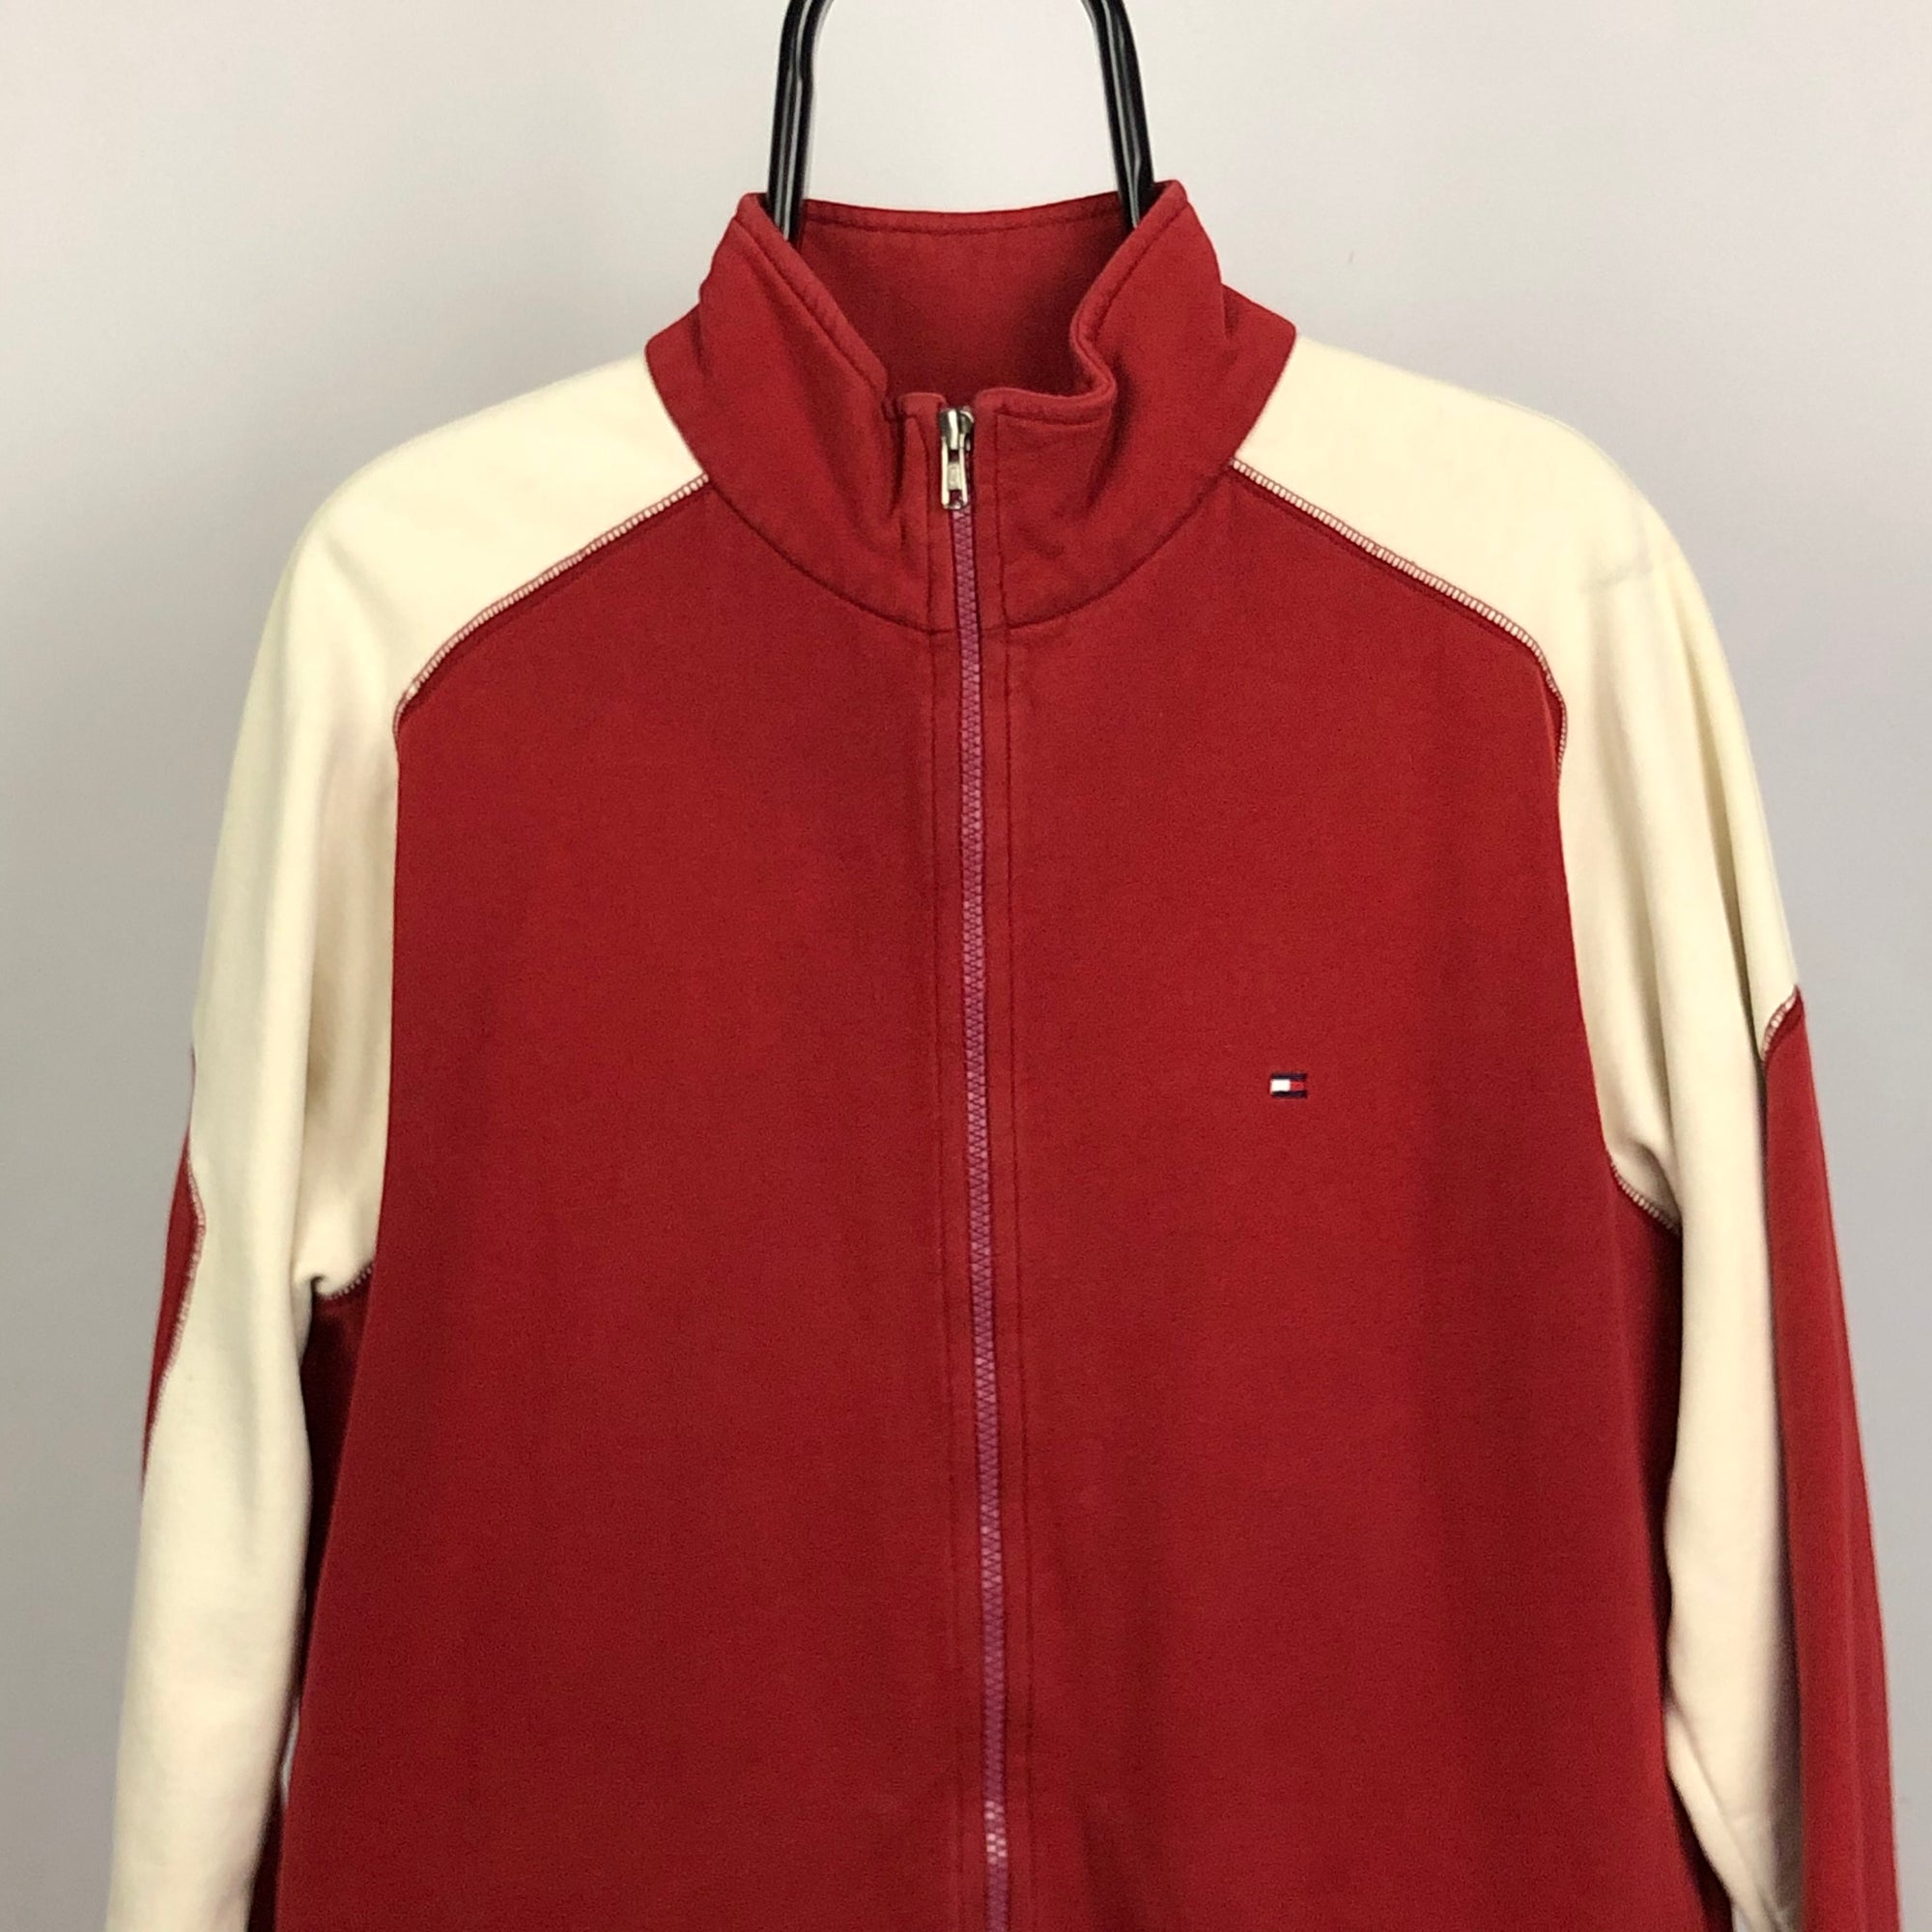 Tommy Hilfiger Zip Jacket in Red/Cream - Men's Medium/Women's Large